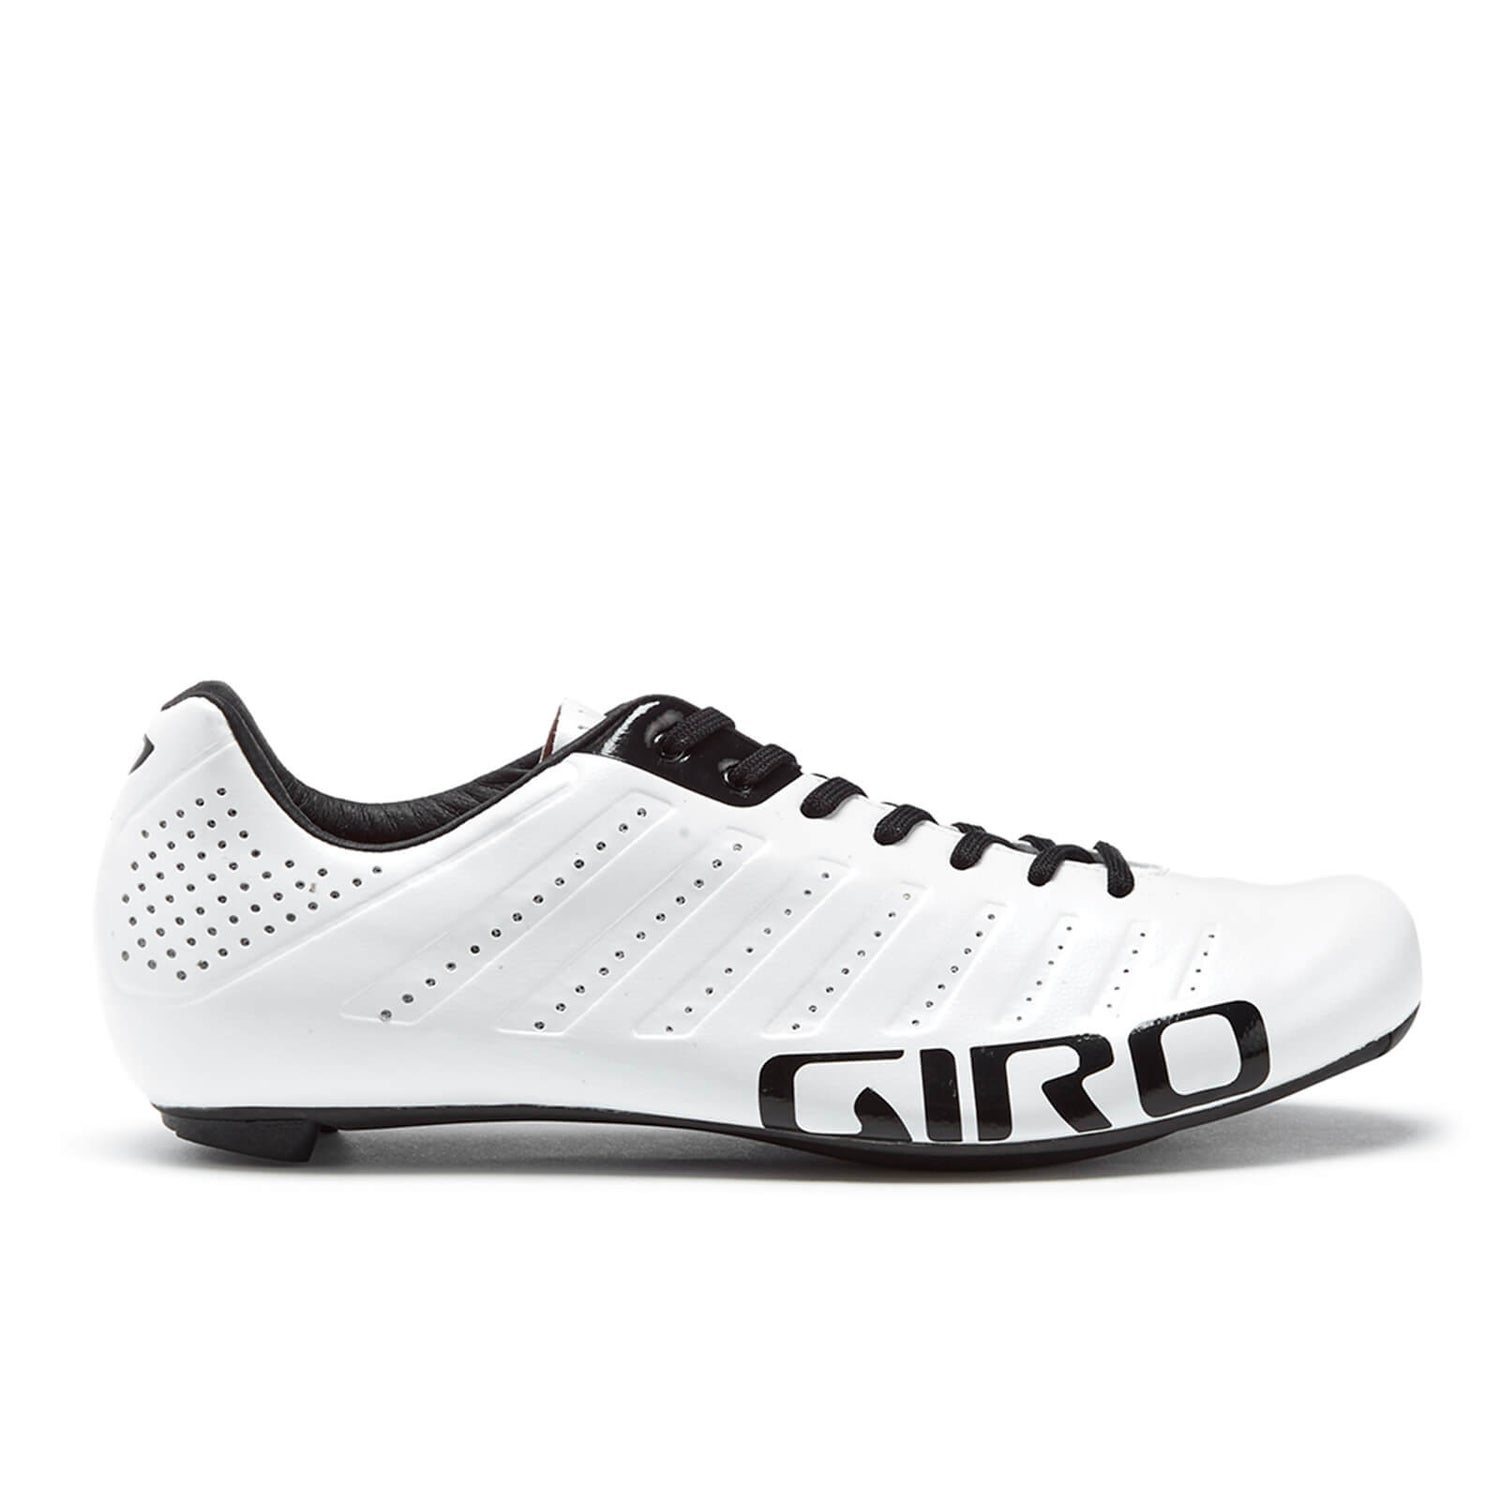 Giro Empire SLX ロード用サイクリング・シューズ - 黒/白